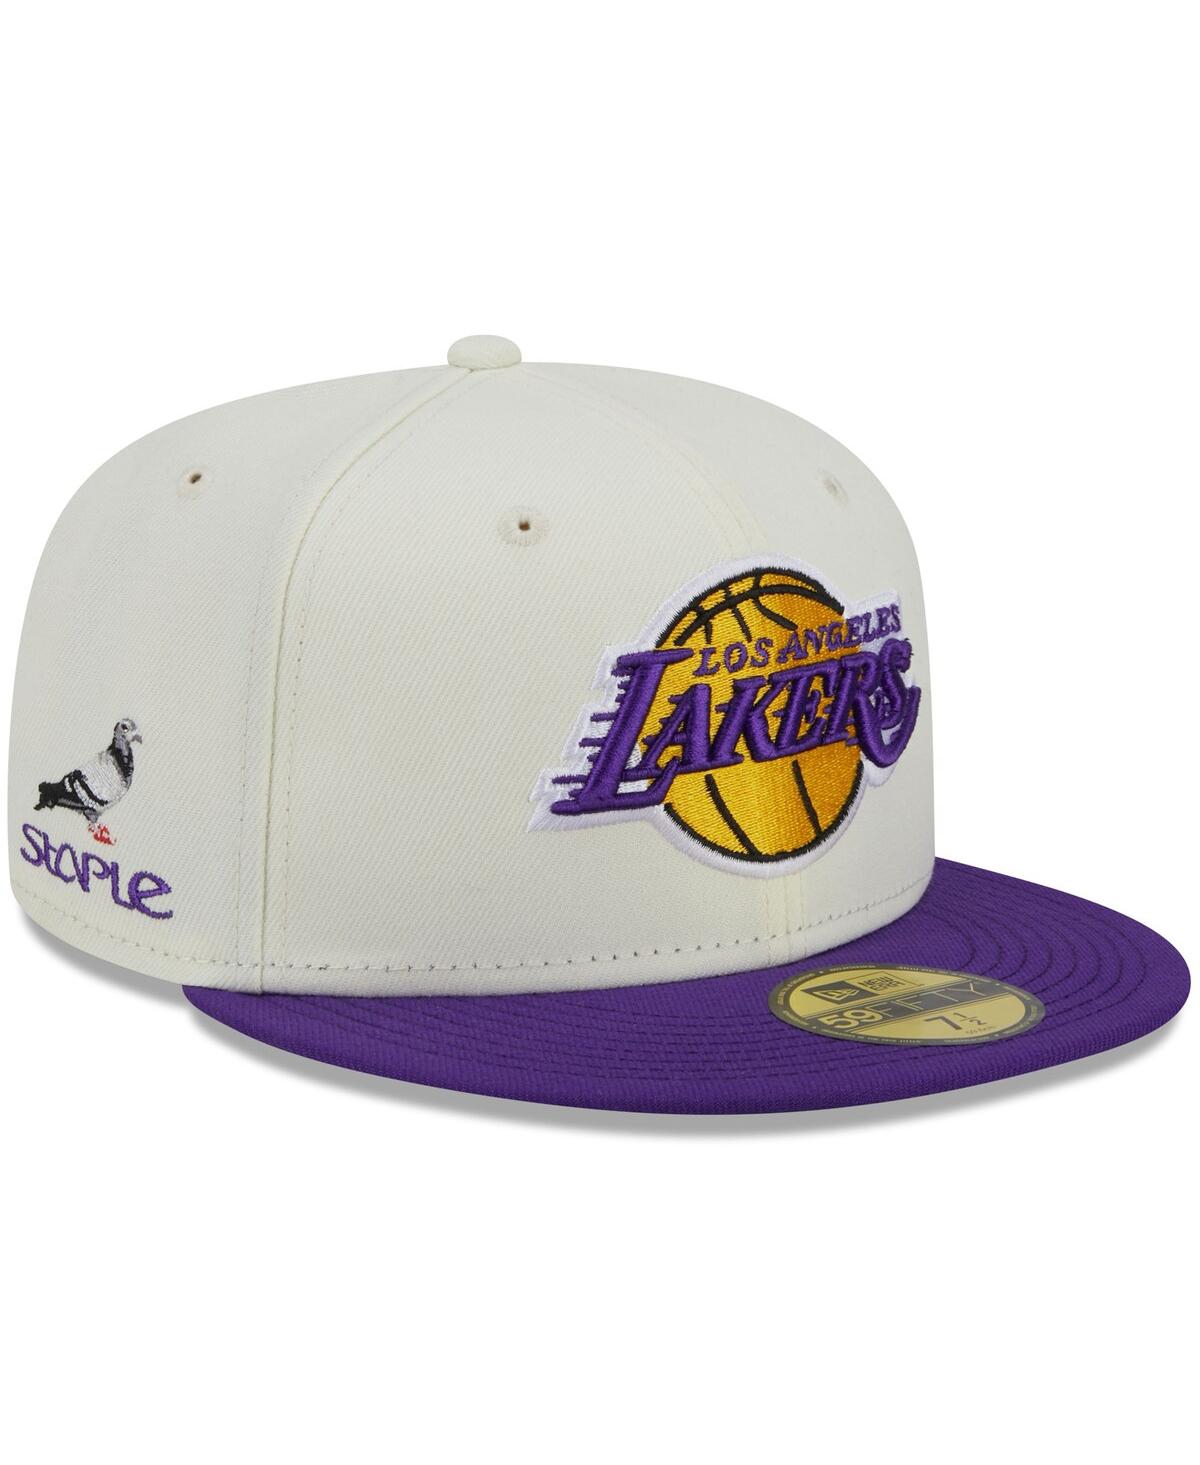 Men's New Era x Staple Cream, Purple Los Angeles Lakers Nba x Staple Two-Tone 59FIFTY Fitted Hat - Cream, Purple